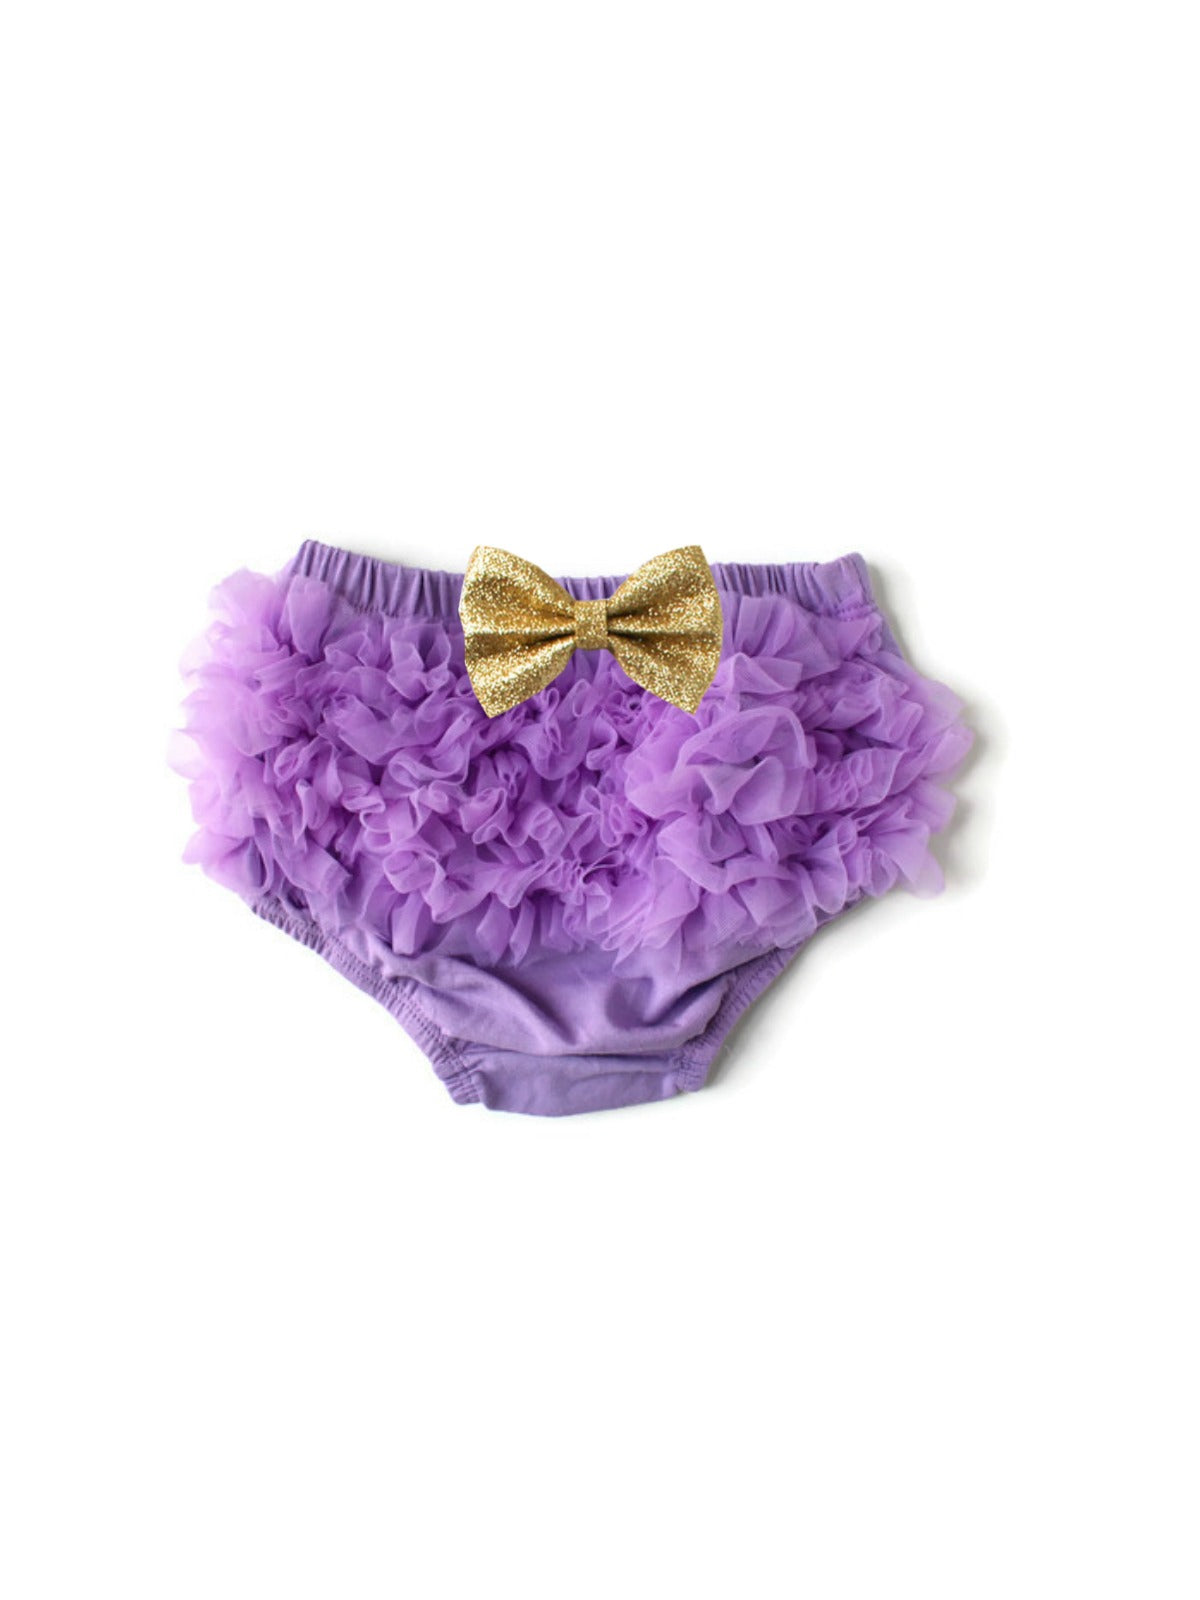 Lavender Ruffle Diaper Cover